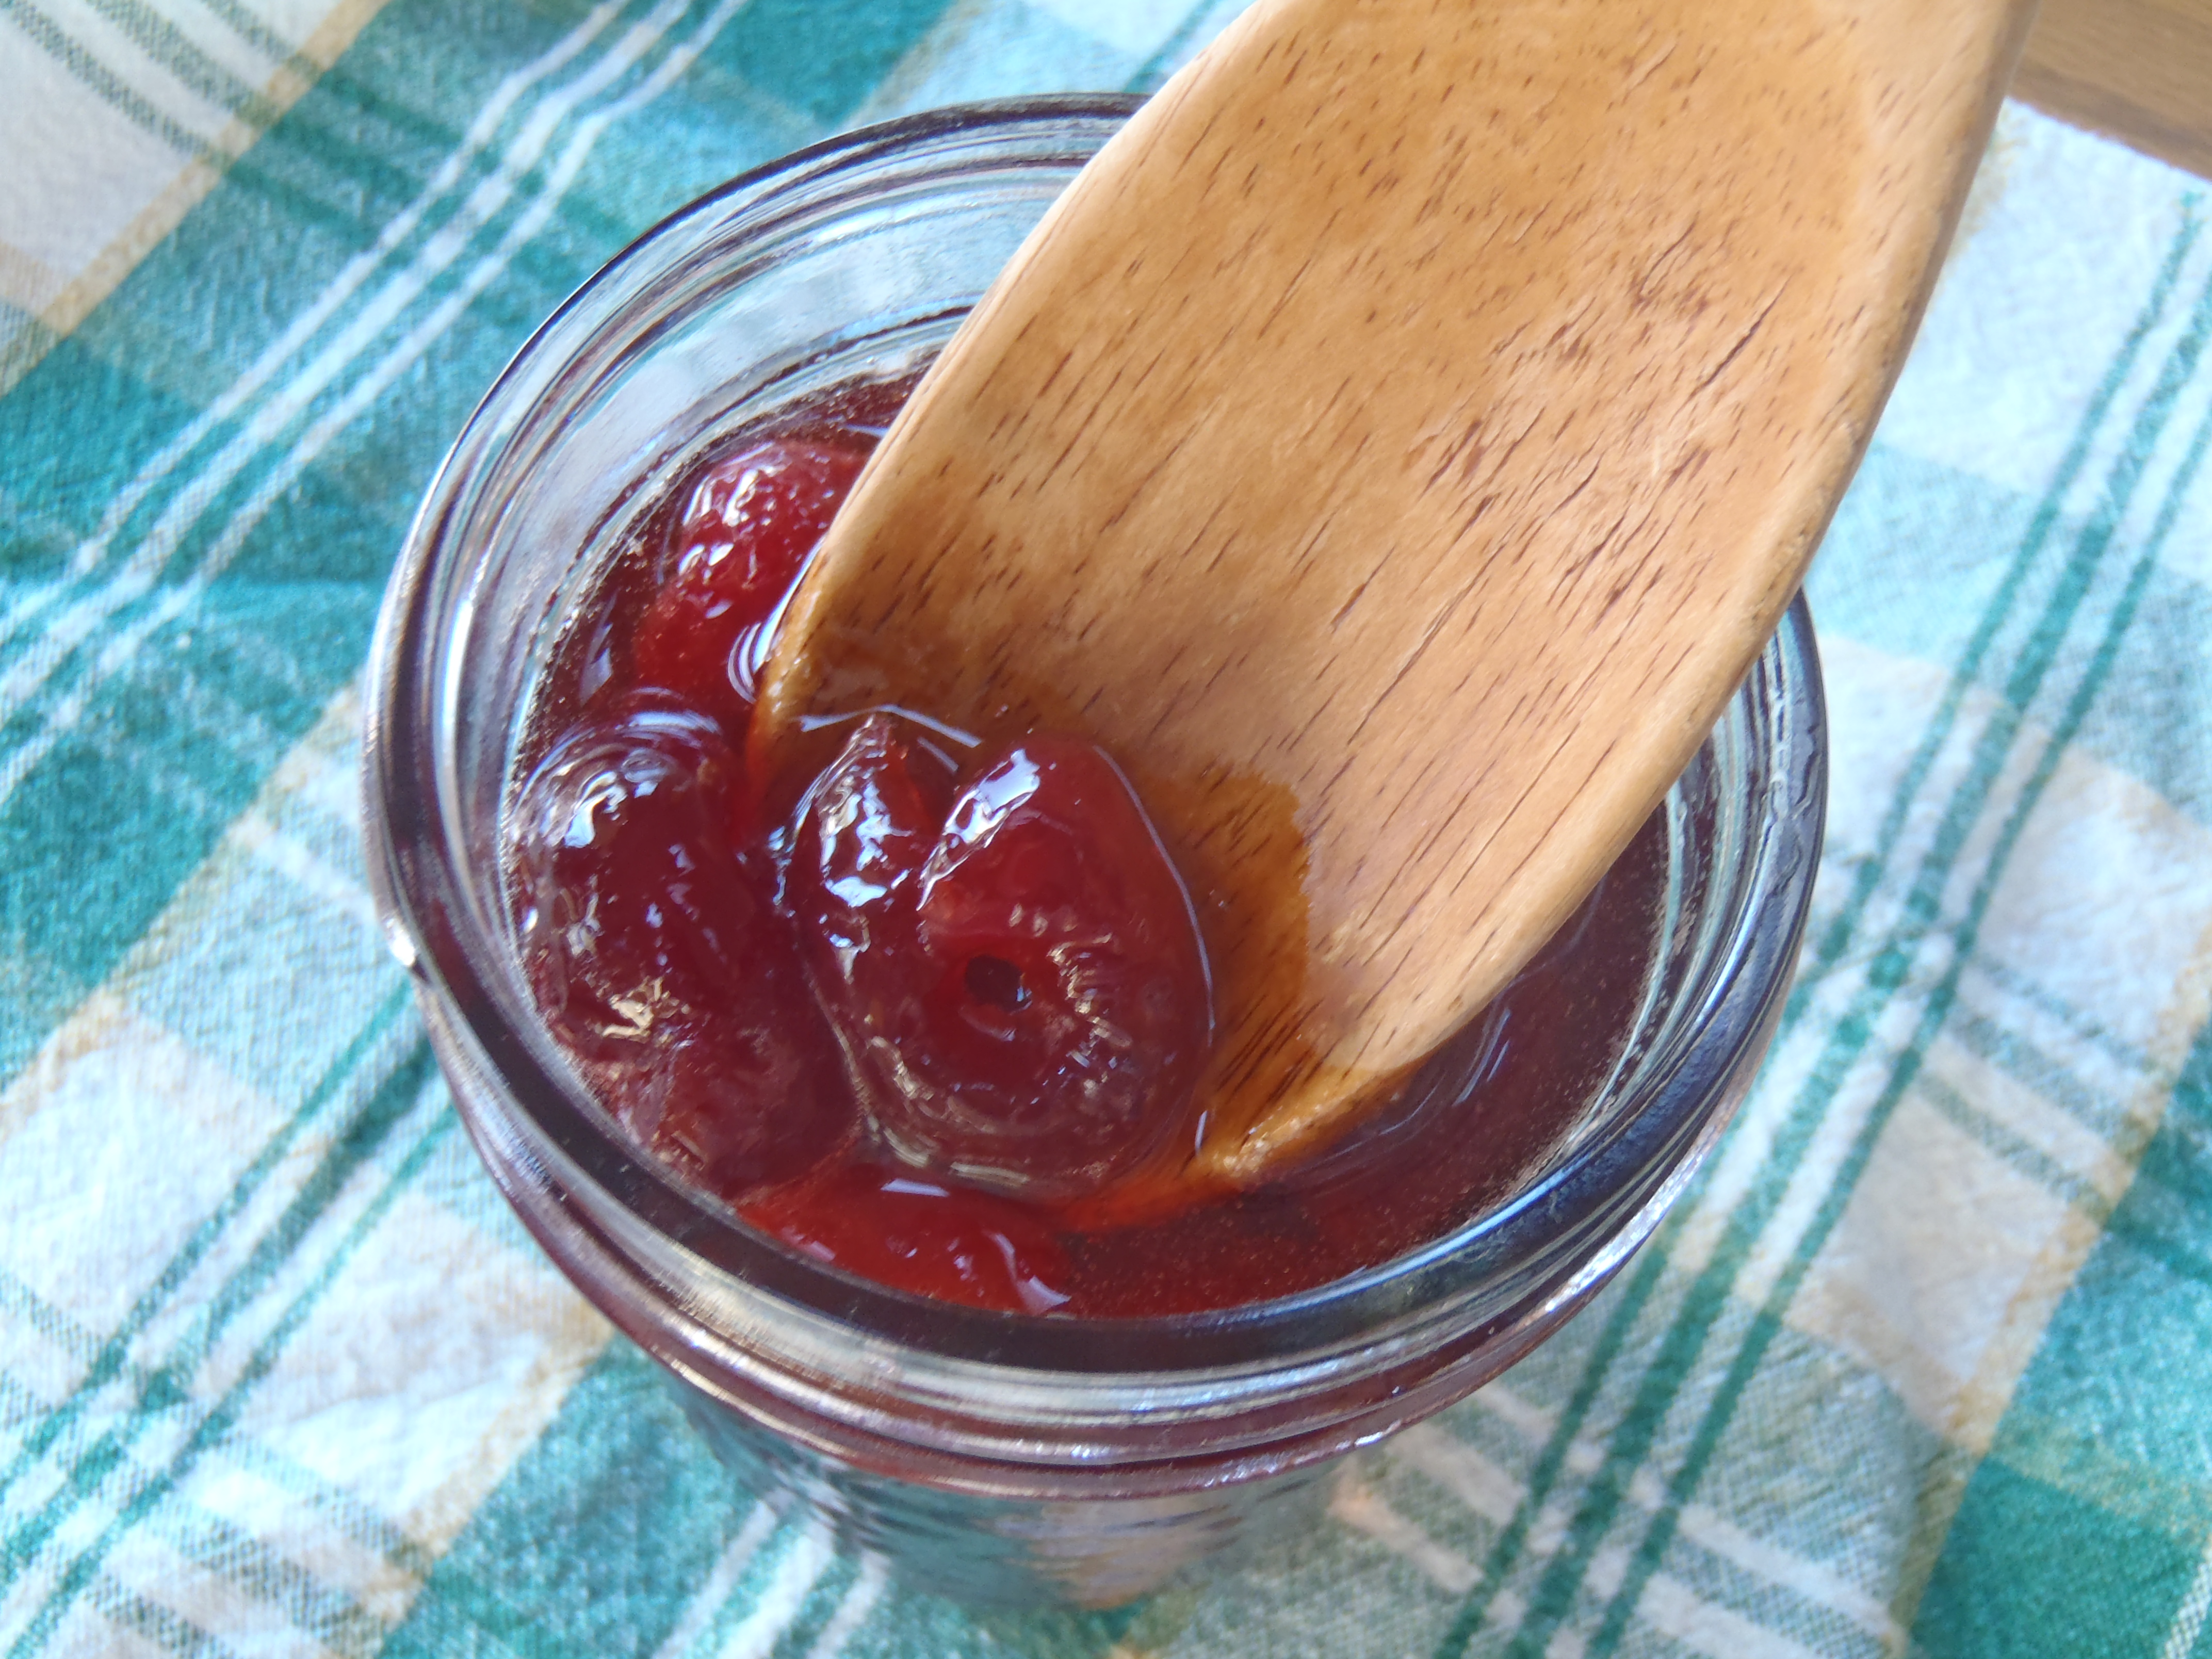 A jar of glacé sour cherries